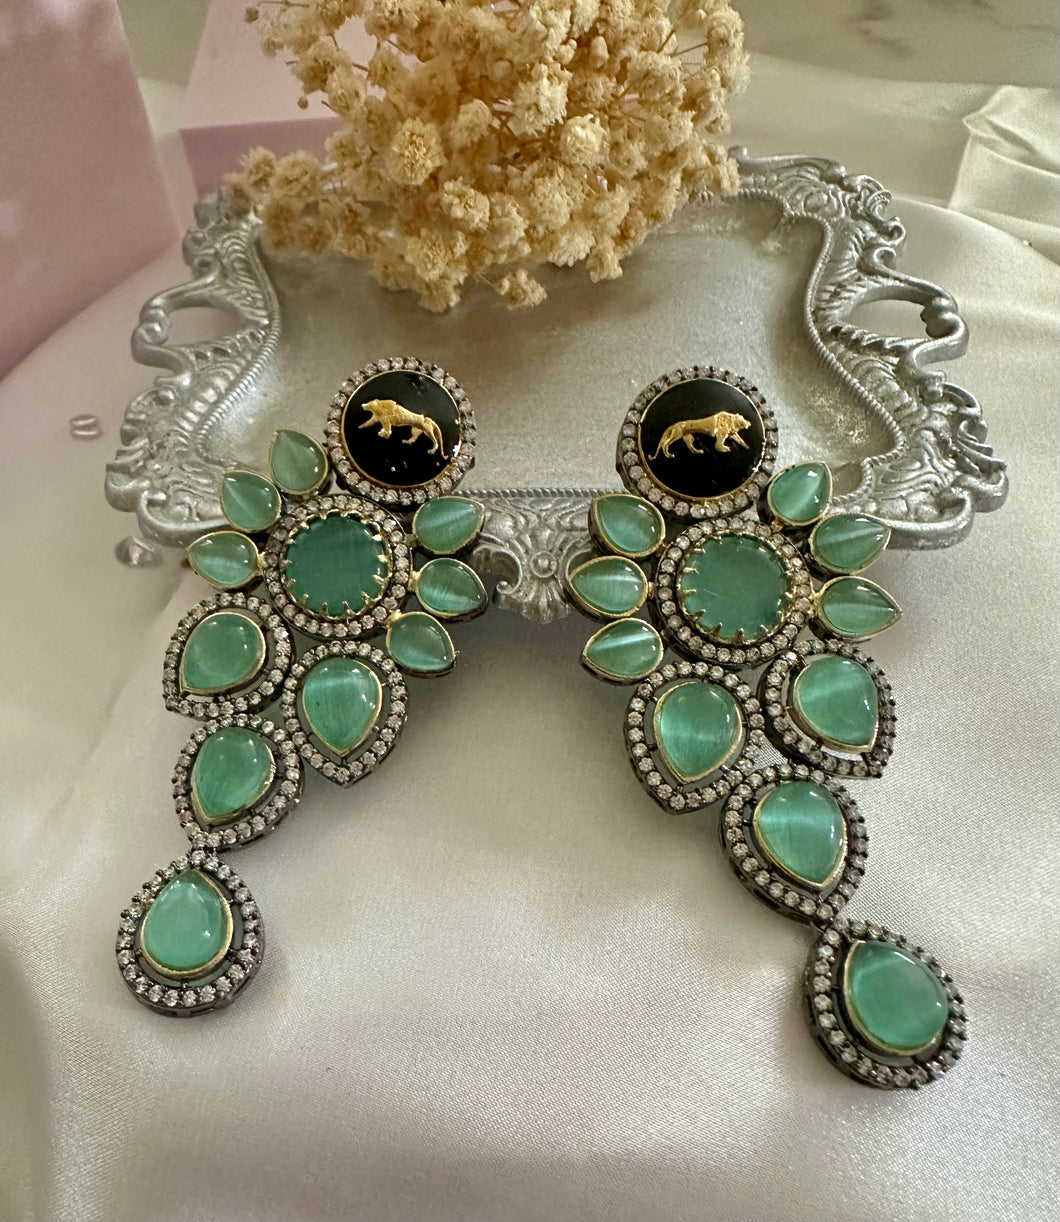 Sea-green sabya inspired earrings